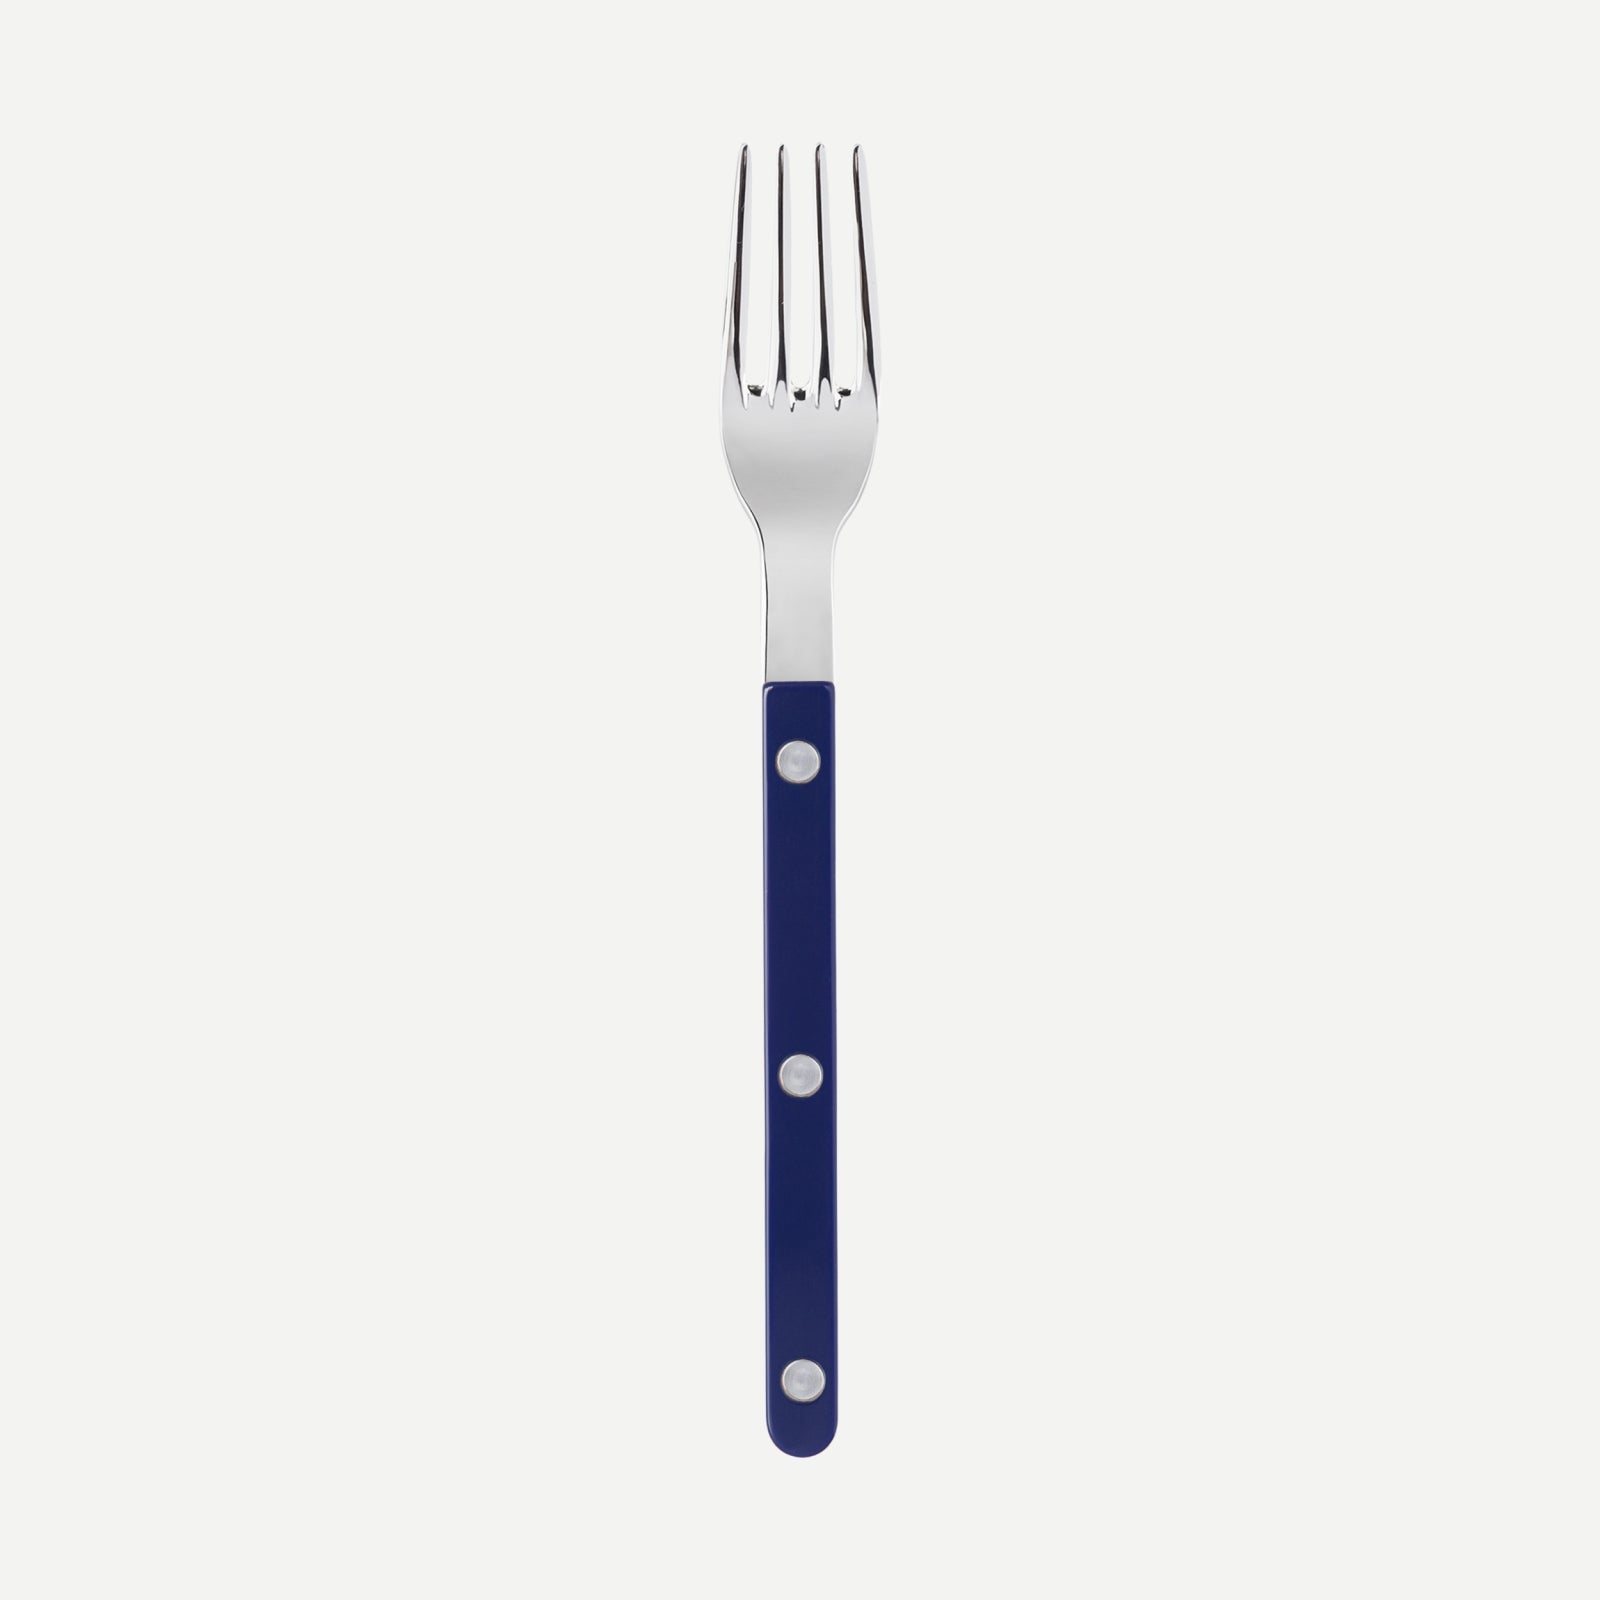 Petite fourchette - Bistrot uni - Bleu marine